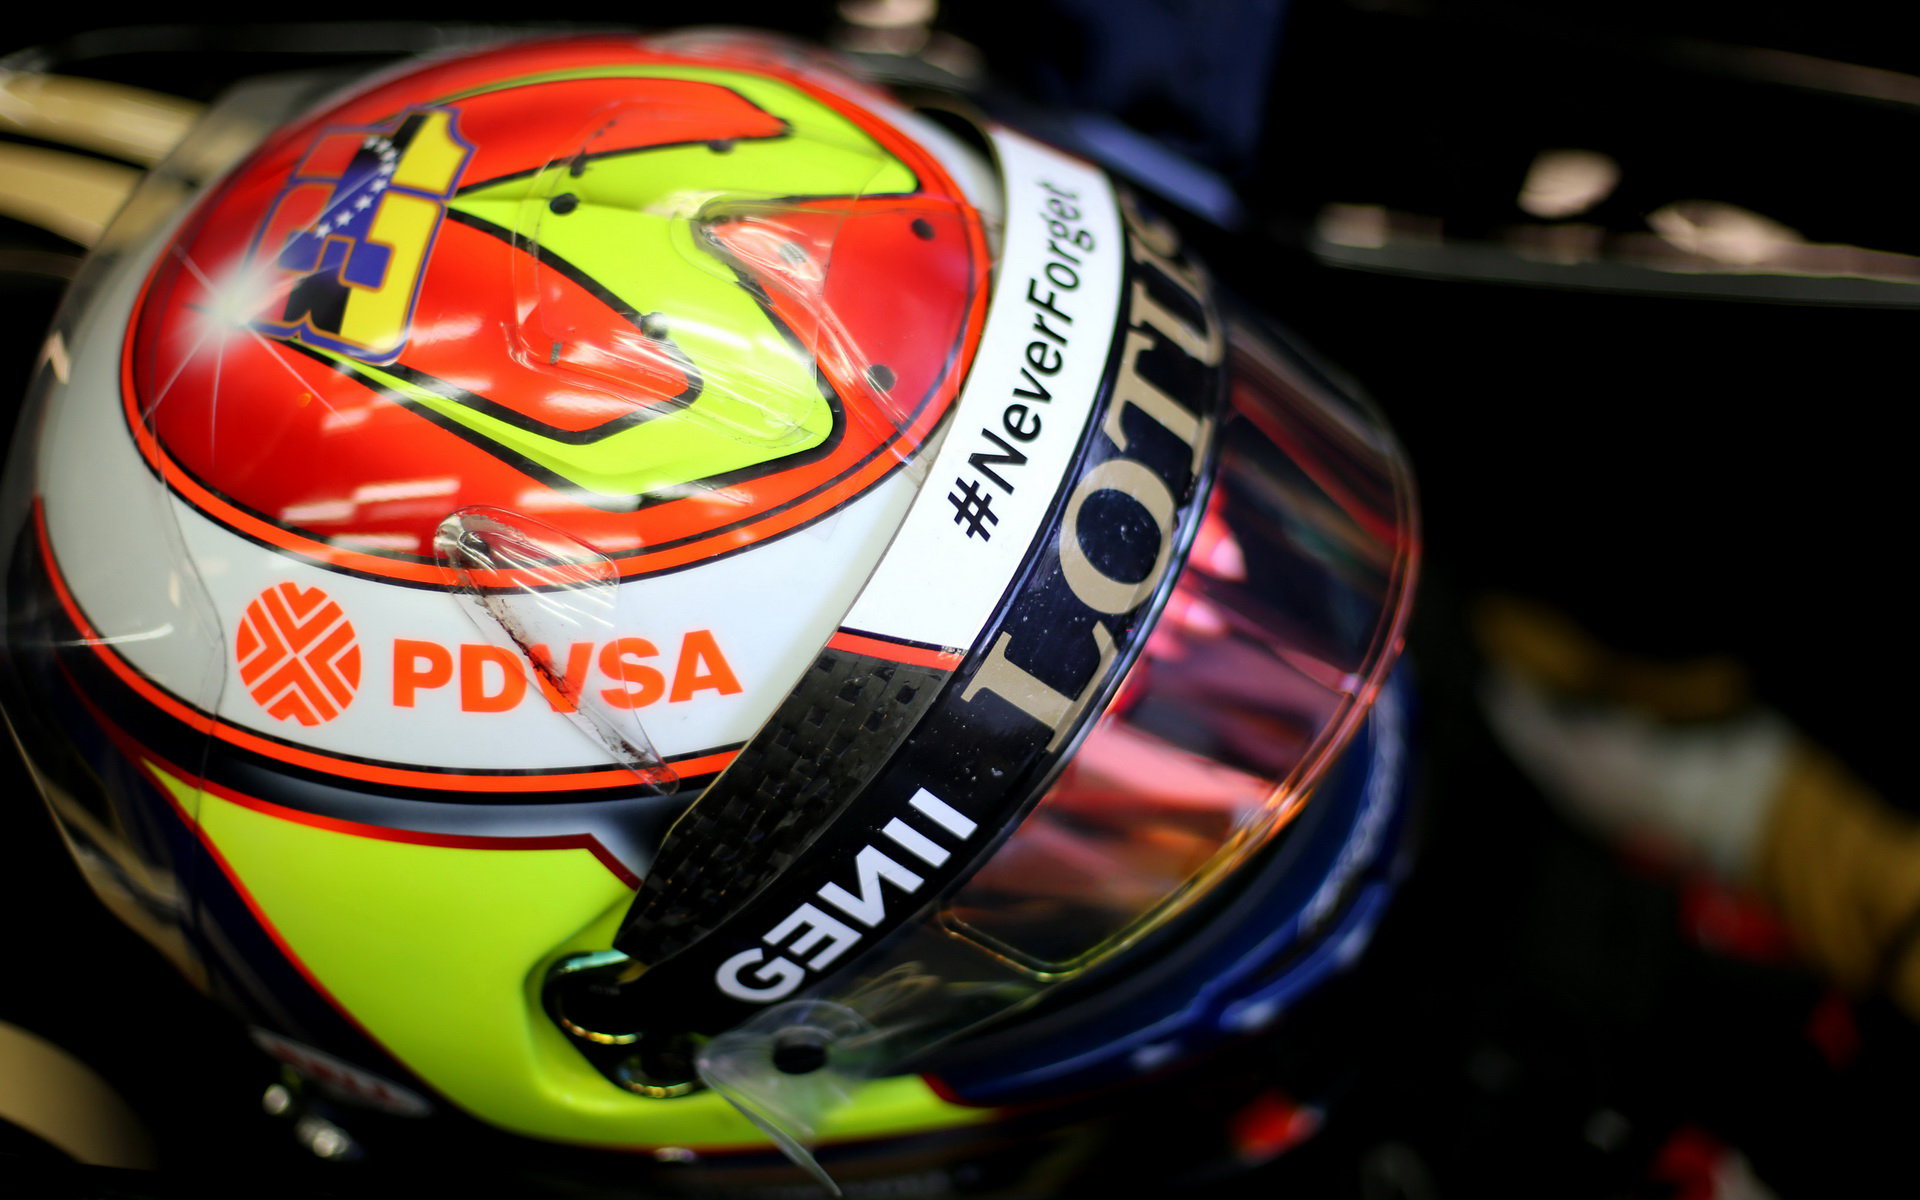 Pastor Maldonado, GP Itálie (Monza)